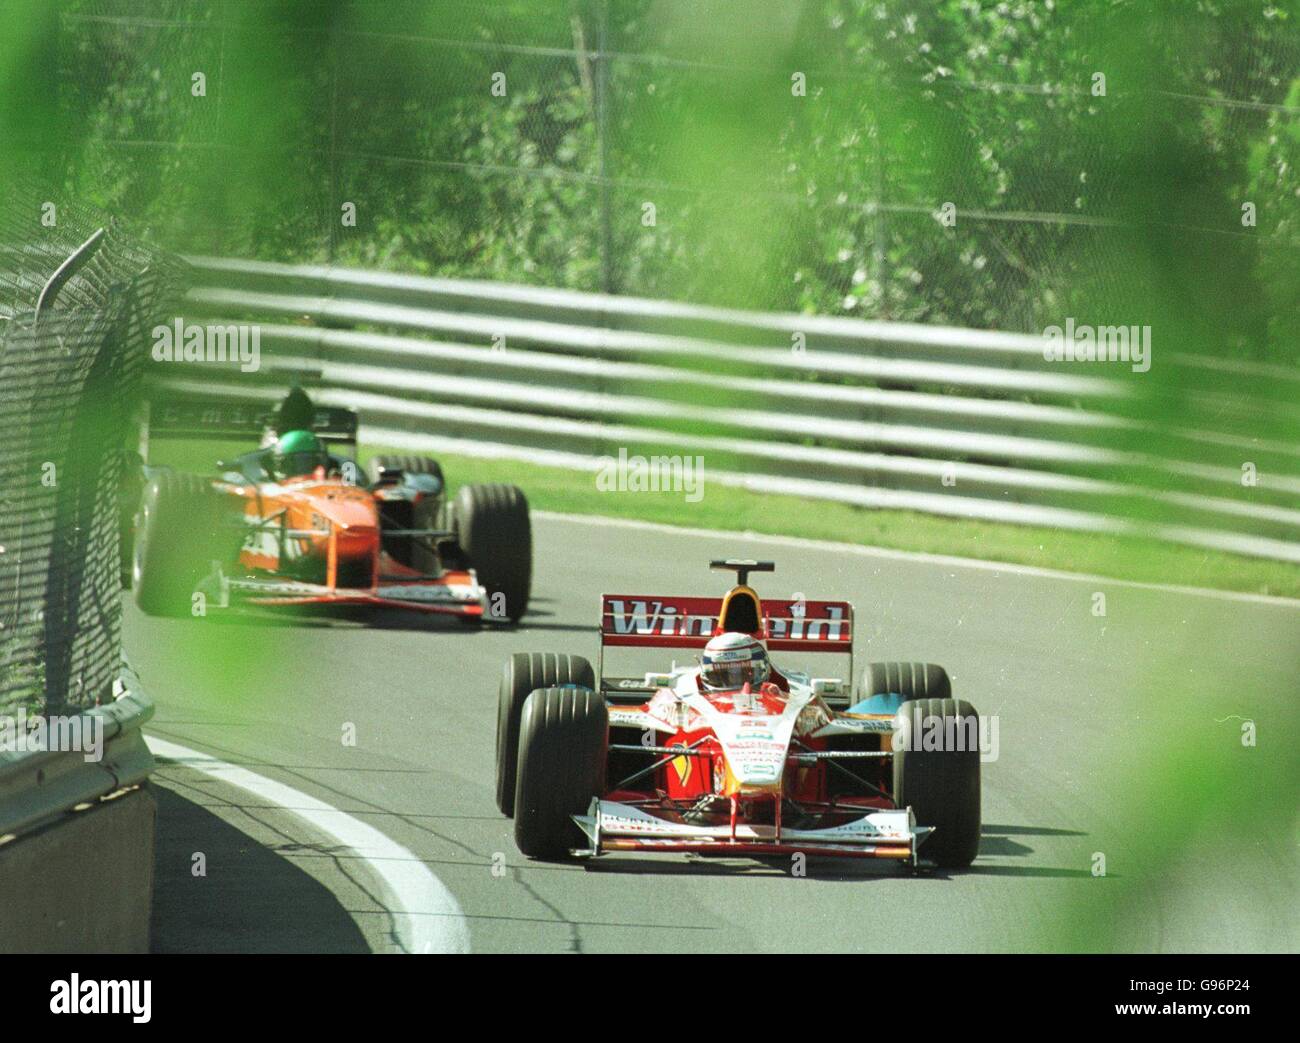 Formula One Motor Racing - Canadian Grand Prix - Qualifying. Alex Zanardi leads Takagi round the Montreal circuit Stock Photo